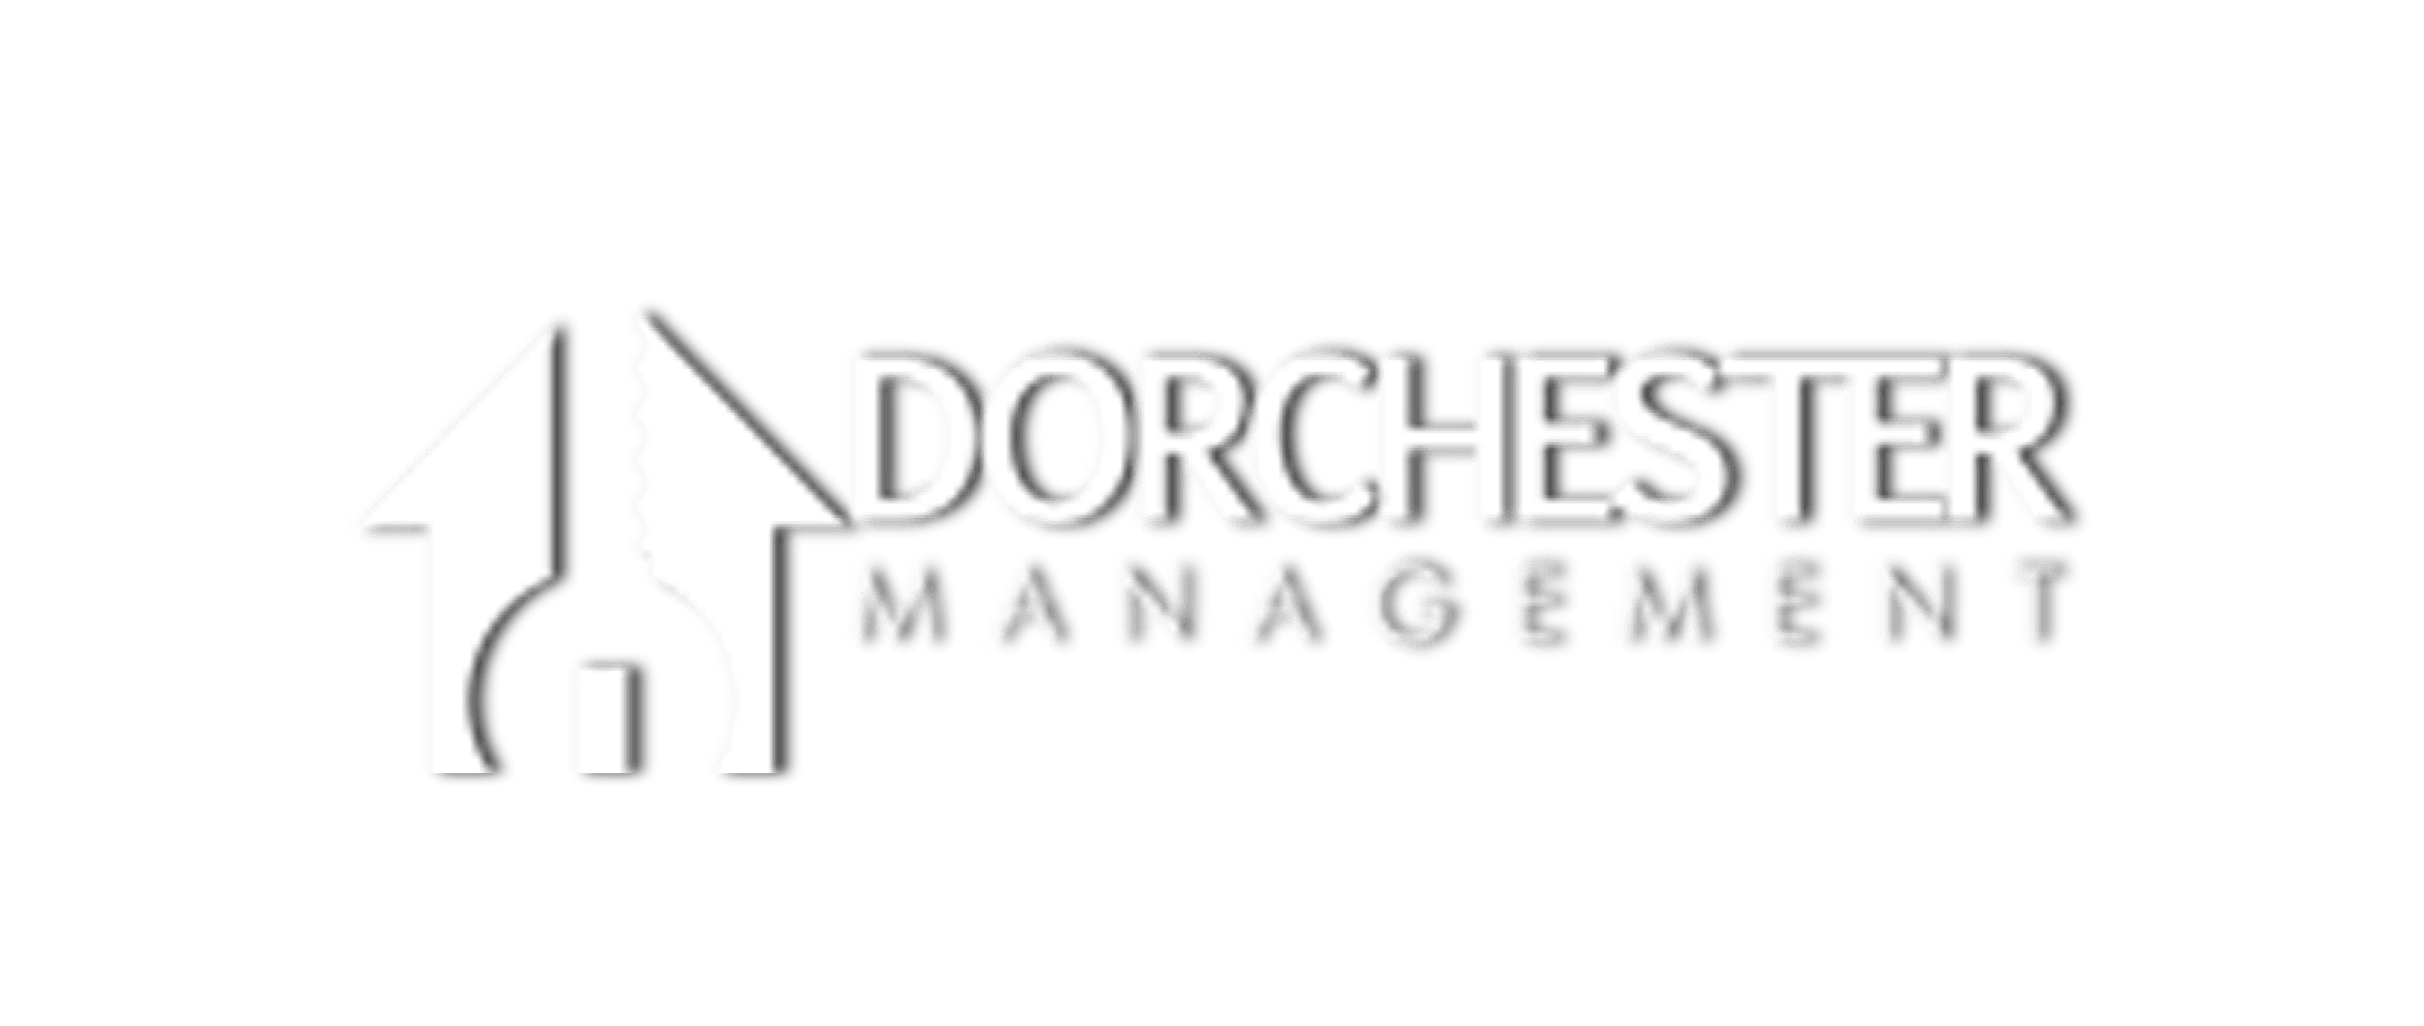 Dorchester Logo - Dorchester Management